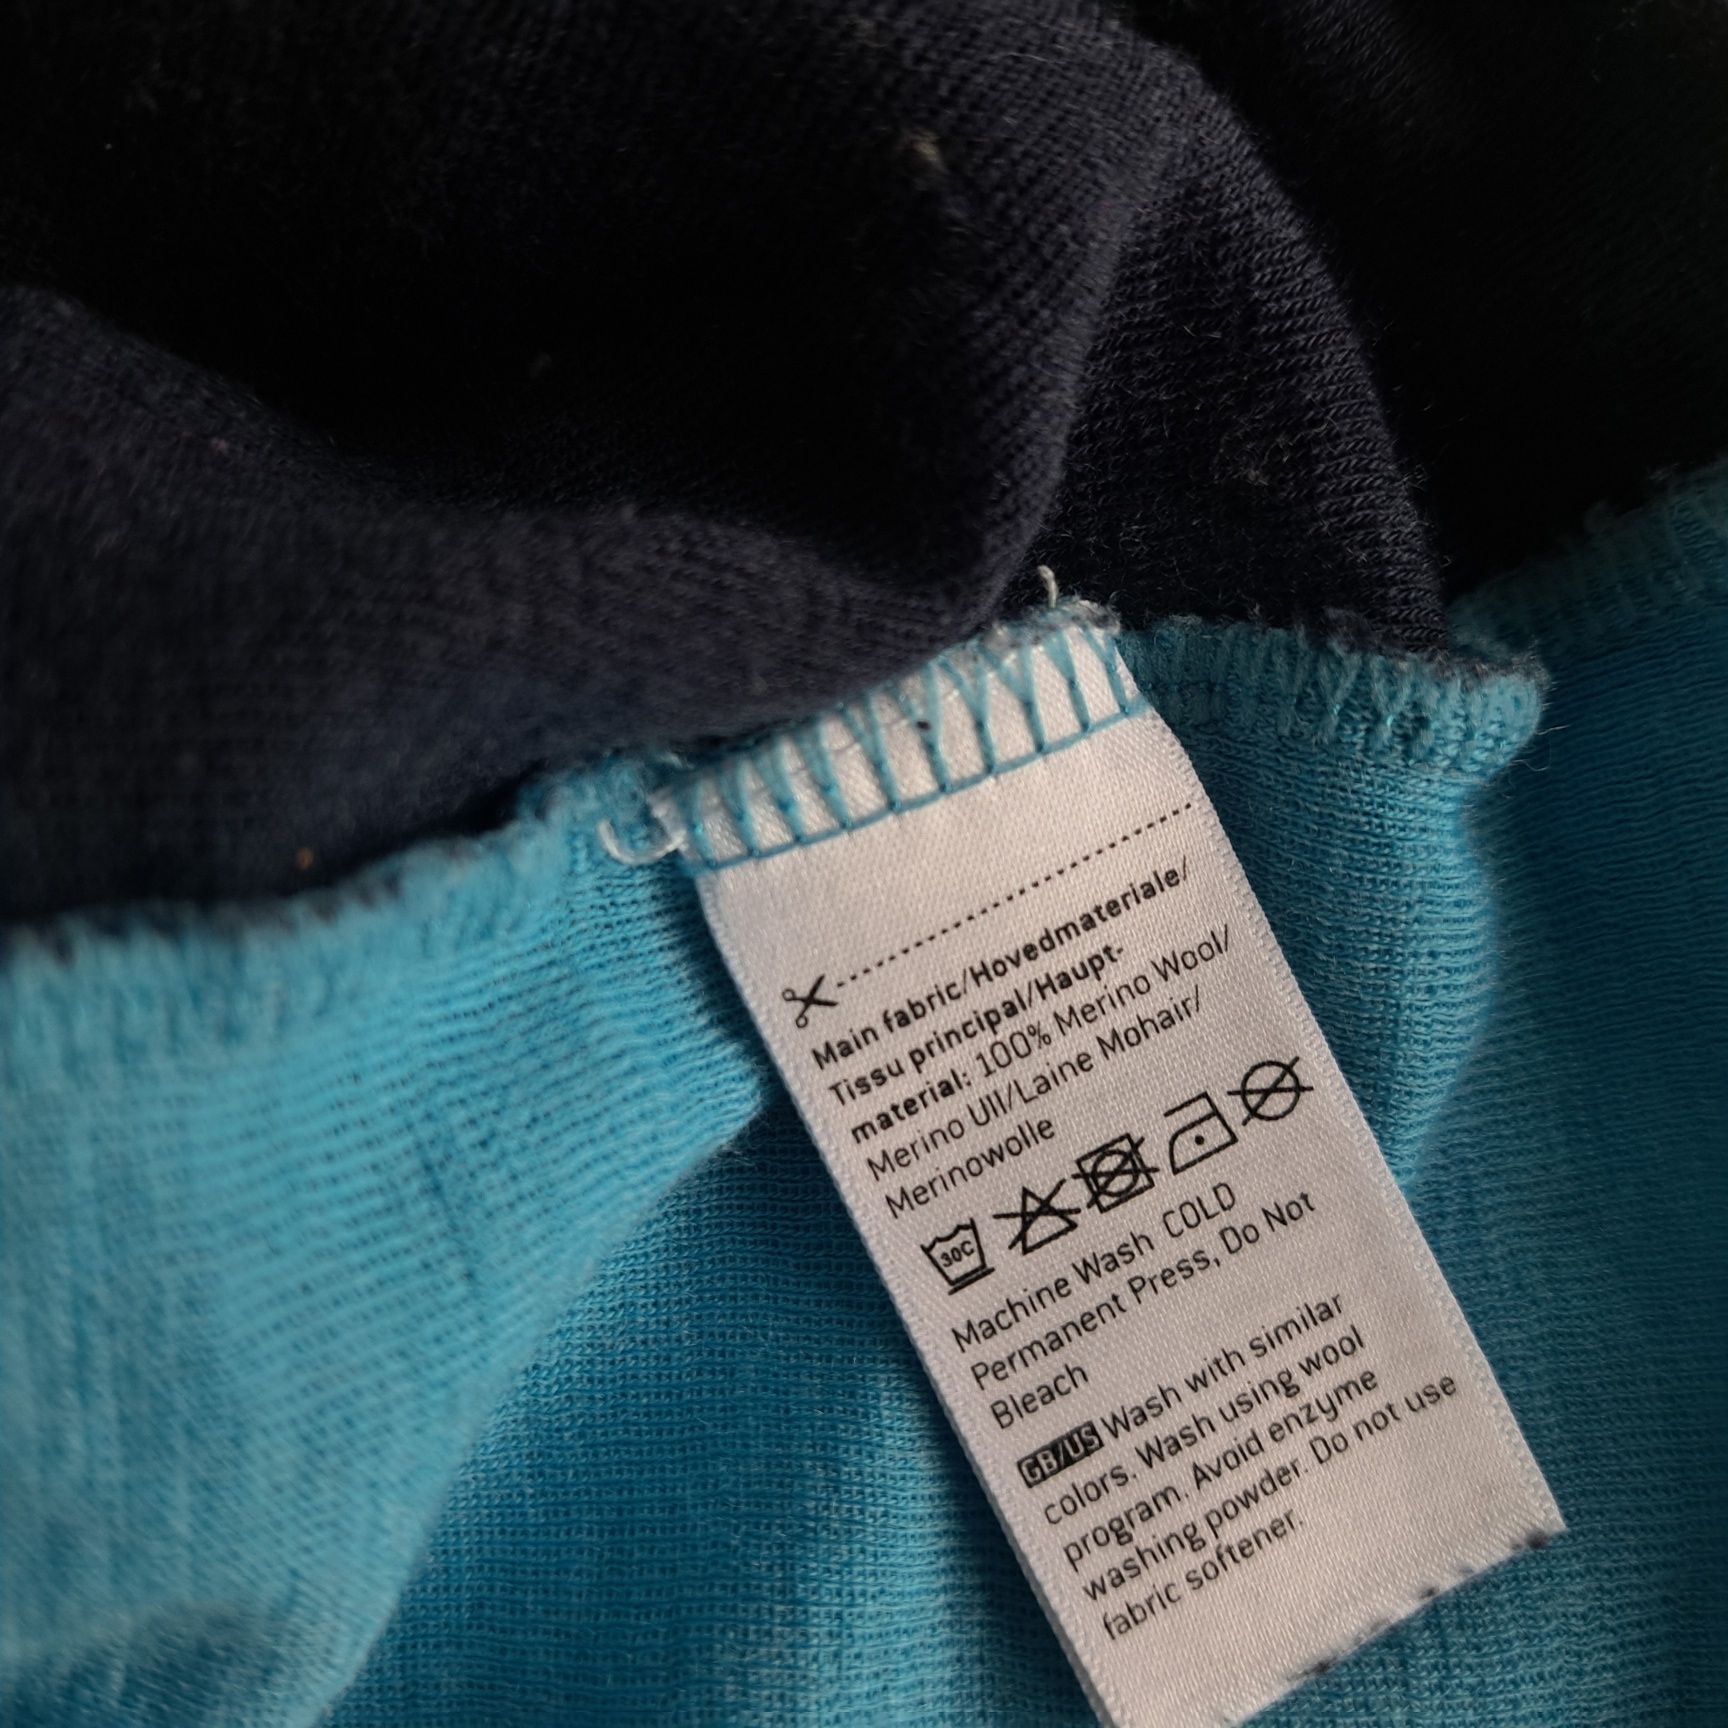 Bluzka termiczna Kari Traa 100% merino wool